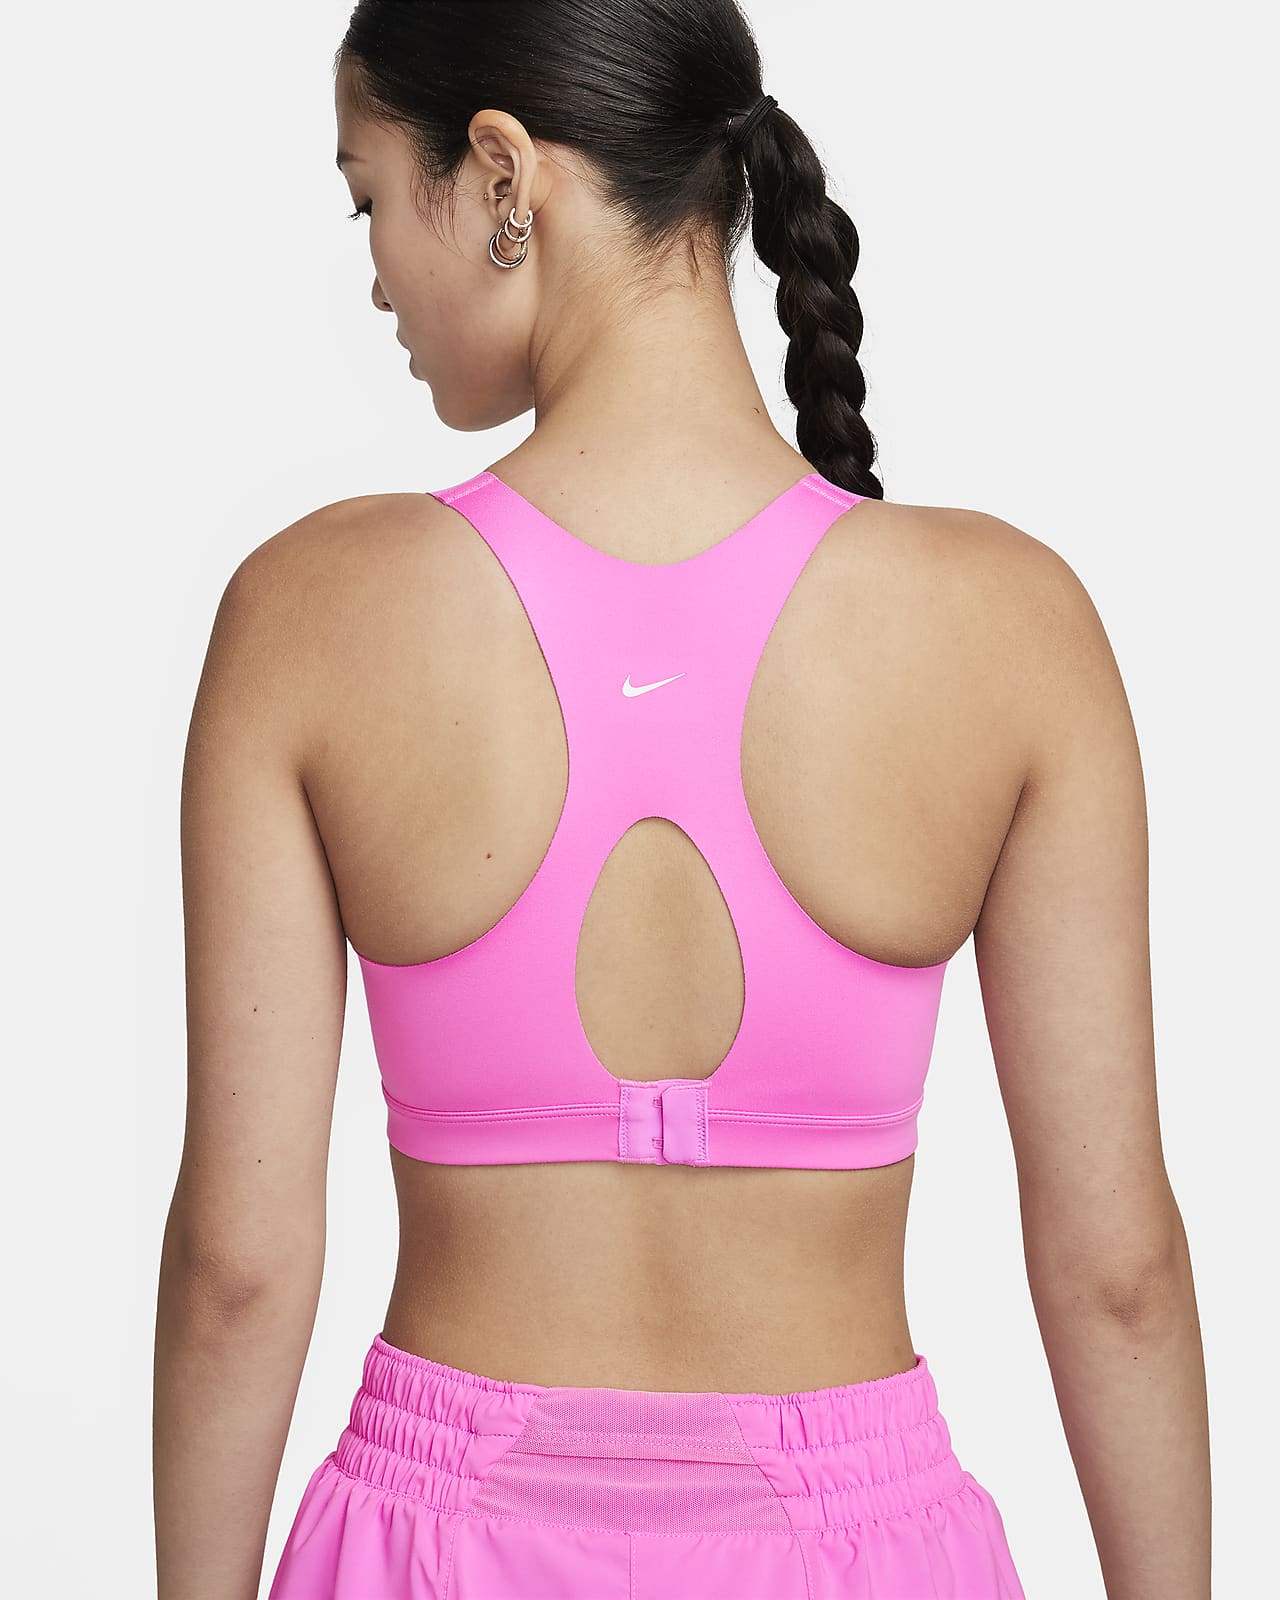 Nike Training Alpha Dri-FIT high support sports bra in bright pink